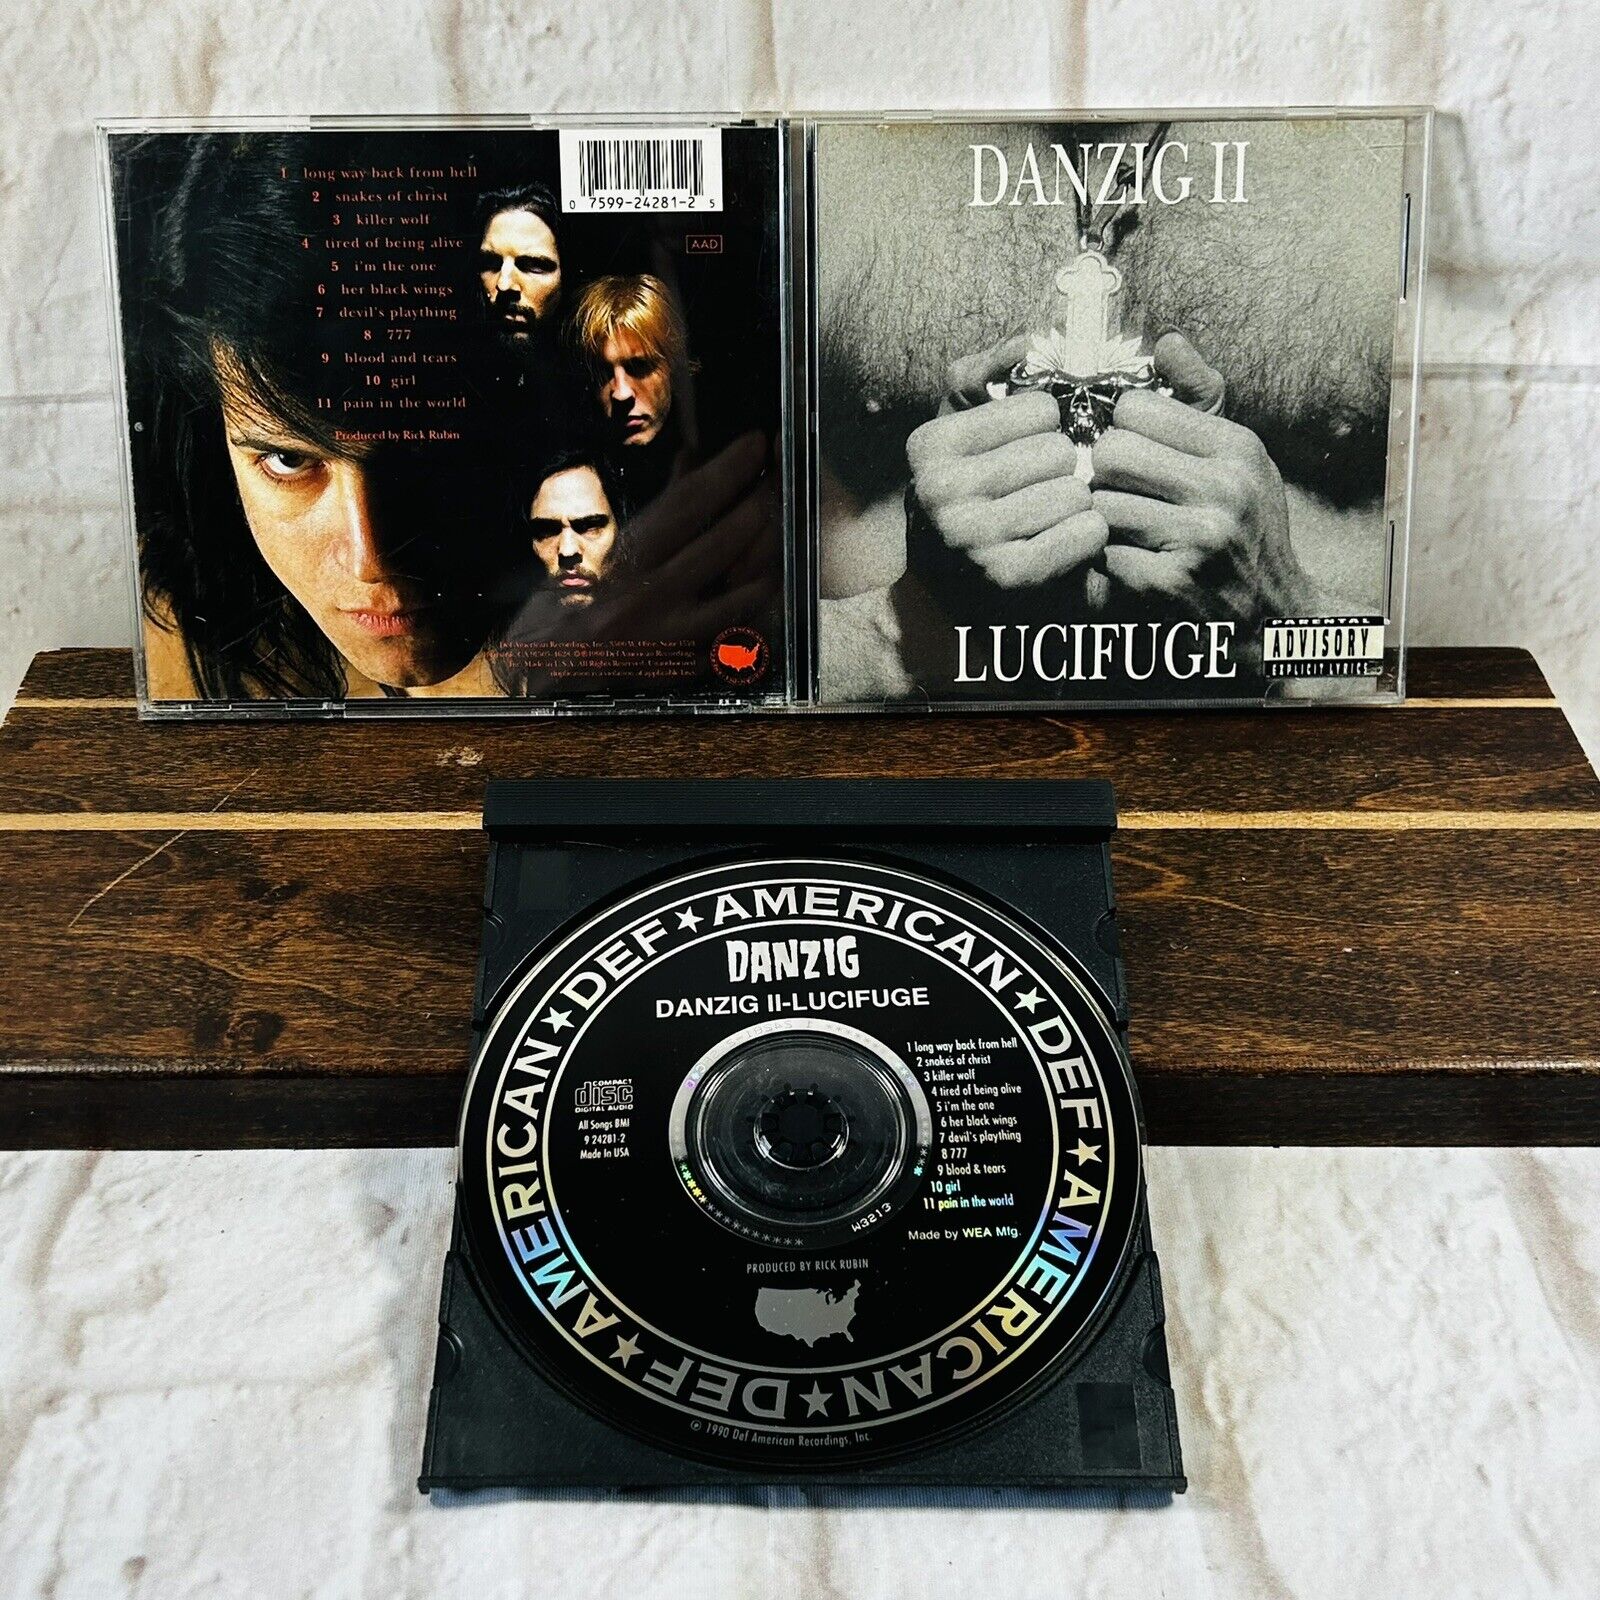 Danzig Danzig 2 Lucifuge 1990 Def American CD